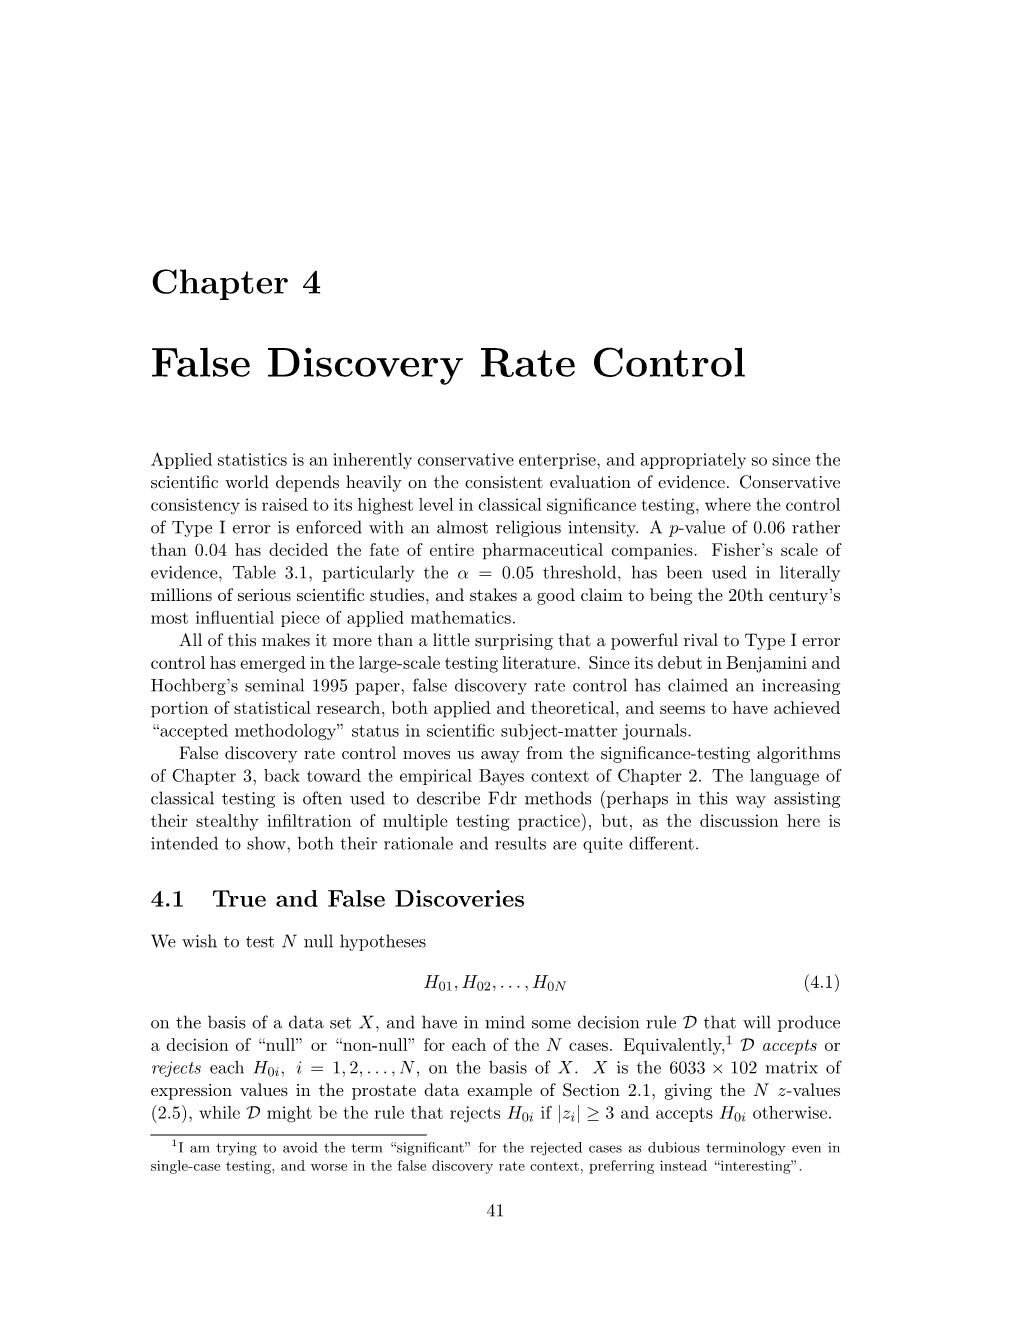 False Discovery Rate Control